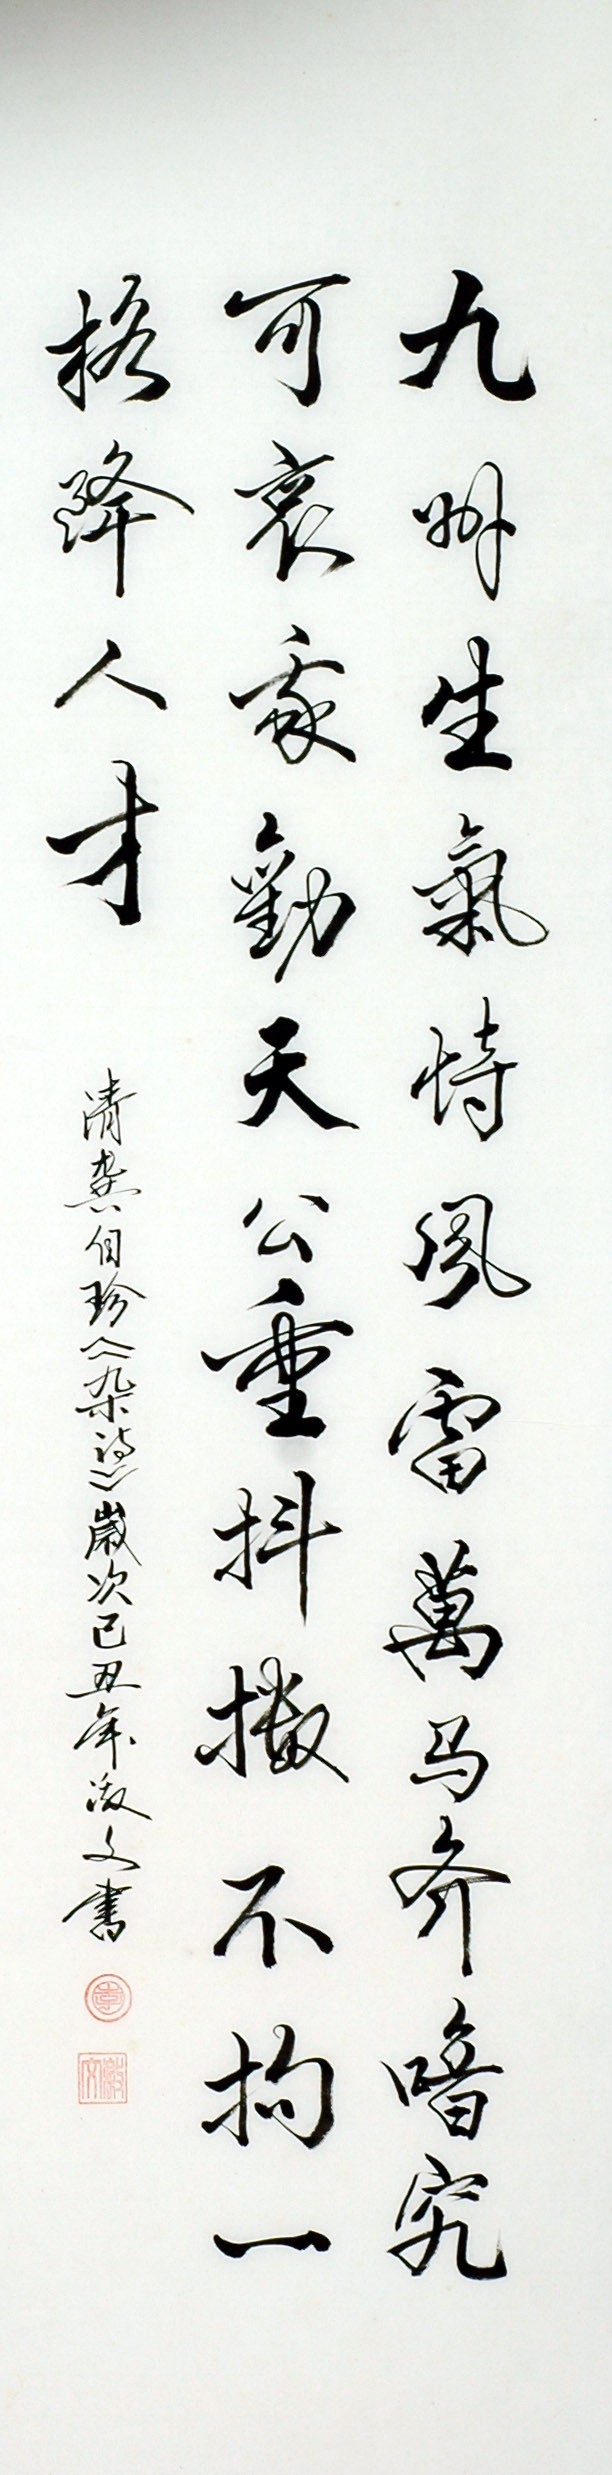 Chinese Cursive Scripts Painting - CNAG010960